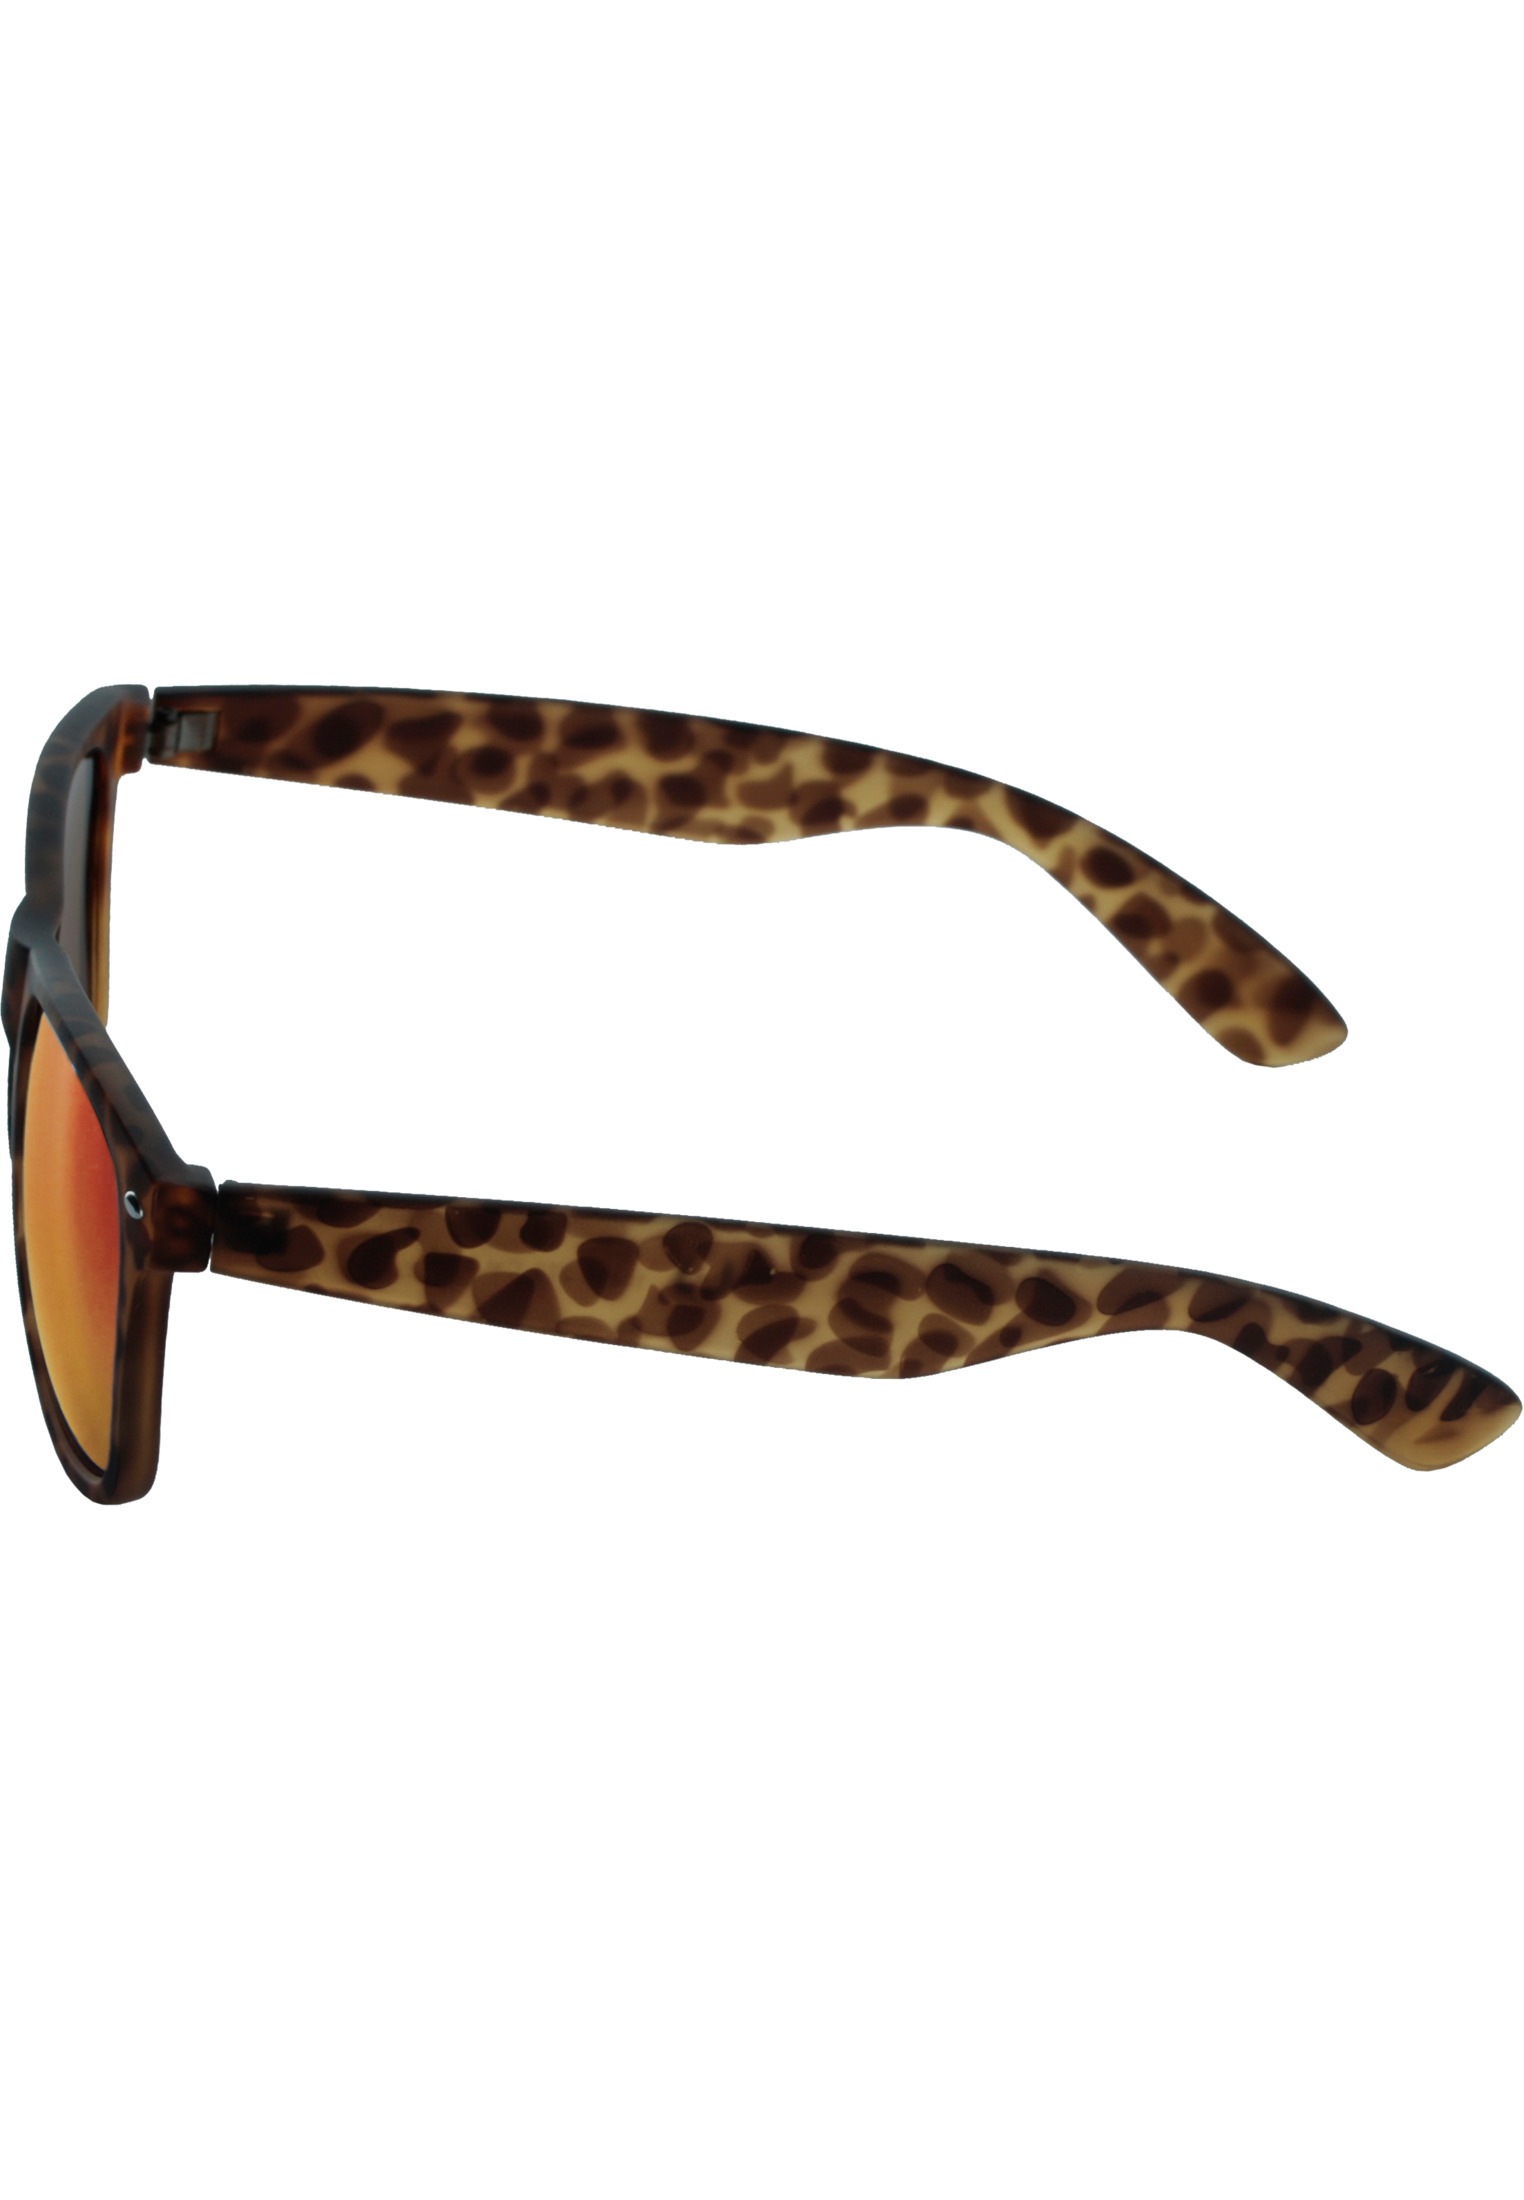 »Accessoires BAUR Likoma Sonnenbrille Black Sunglasses MSTRDS | Friday Mirror«